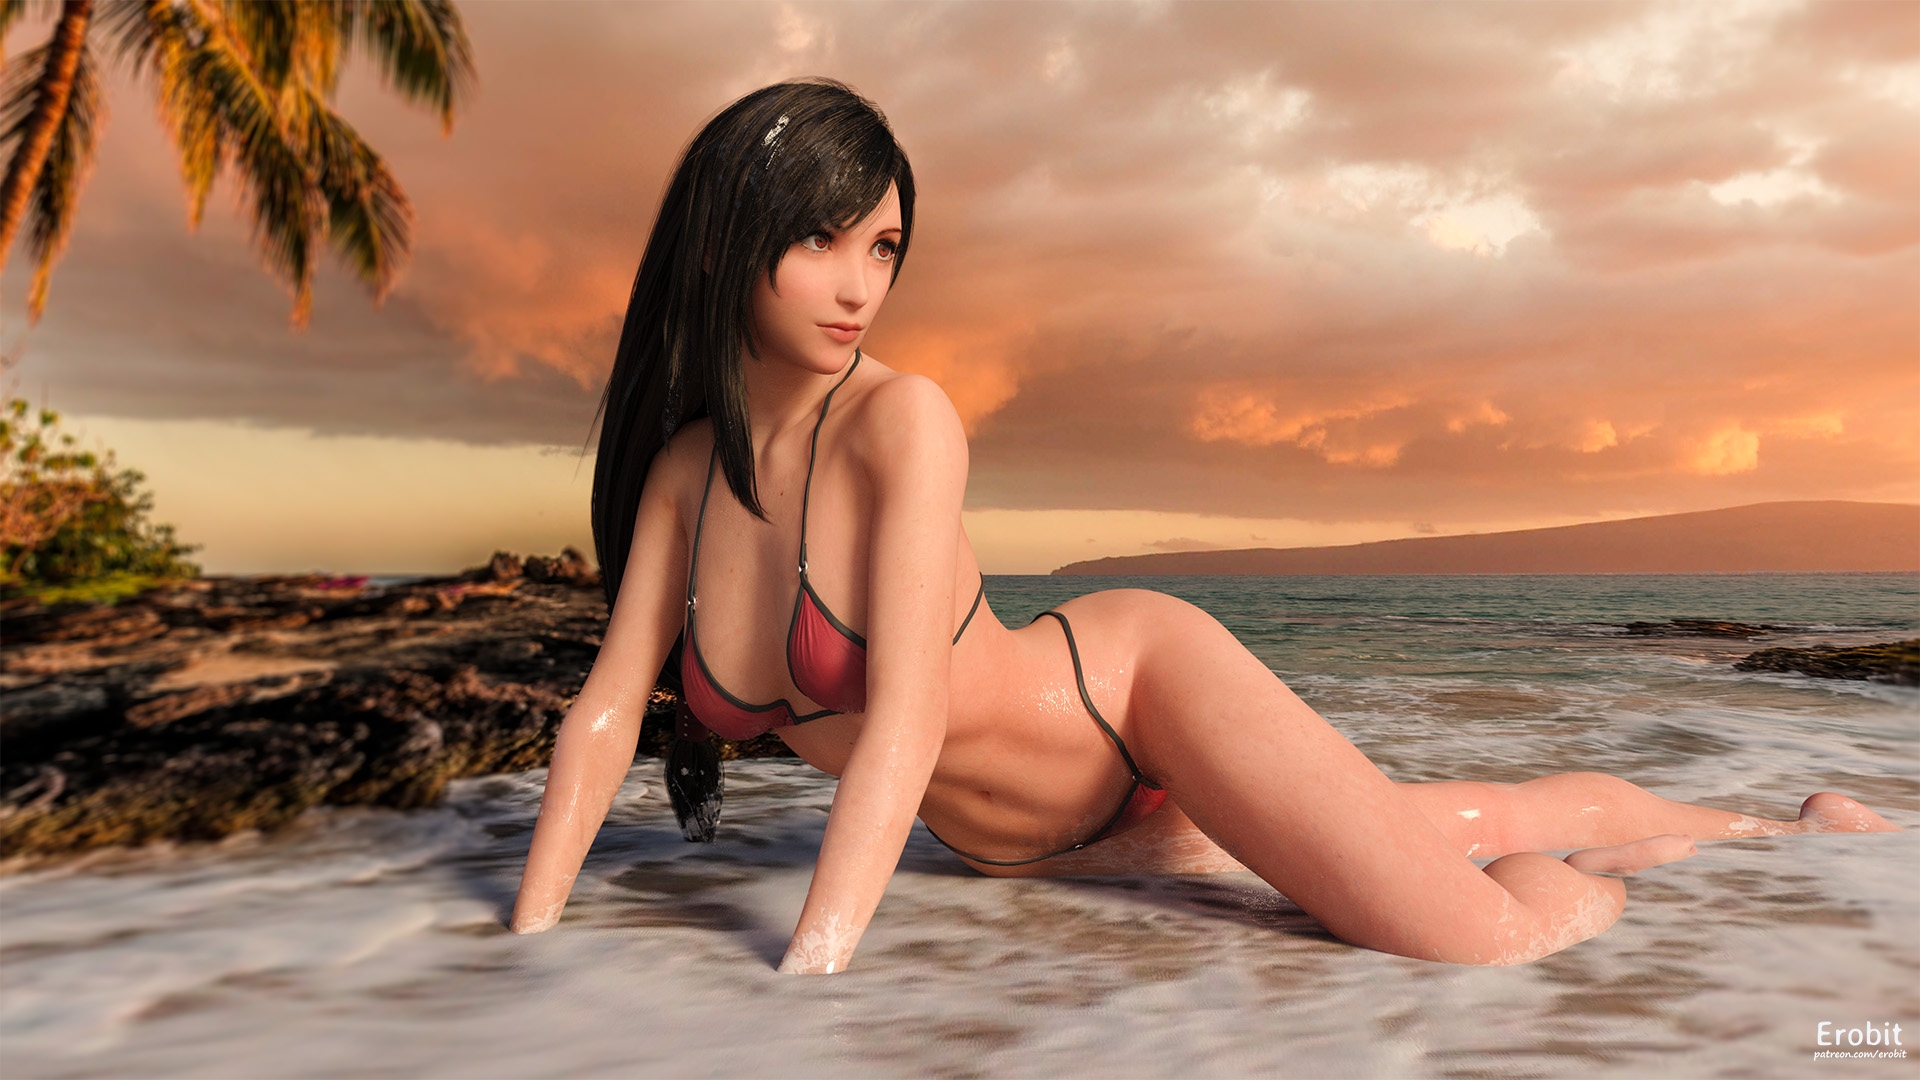 Tifa is having fun at the beach! Tifa Lockhart Tifa Final Fantasy Final Fantasy 7 Final Fantasy 7 Remake Bikini Beach Sunset Wet